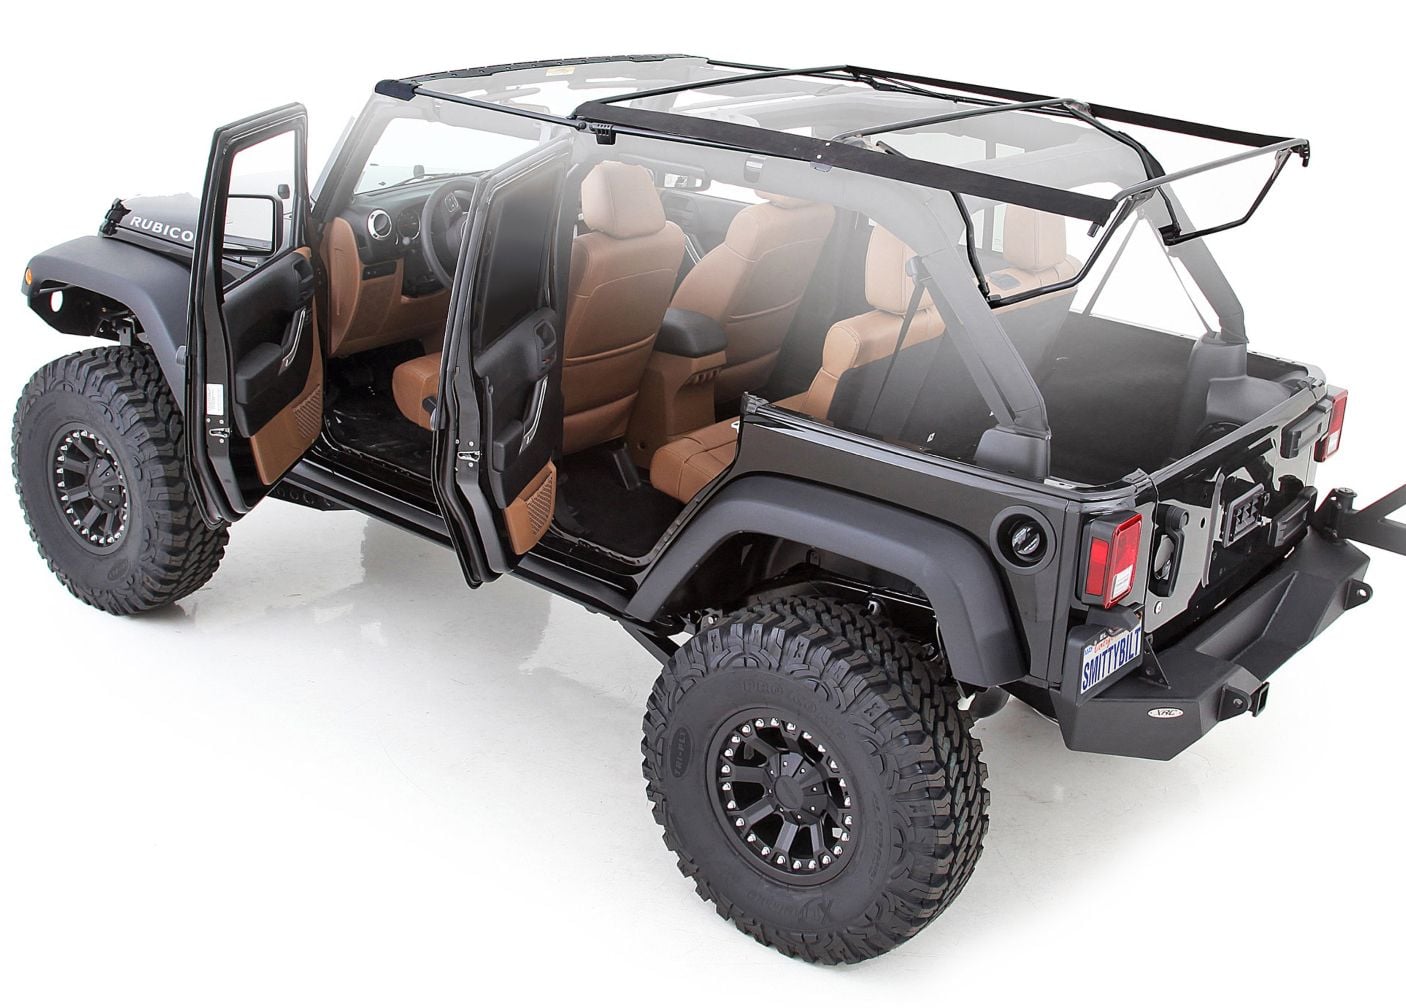 Exterior Body Parts - JKU Softtop frame - SMITTYBILT PN S/B91306 - New - 2007 to 2018 Jeep Wrangler Unlimited - Aledo, TX 76008, United States